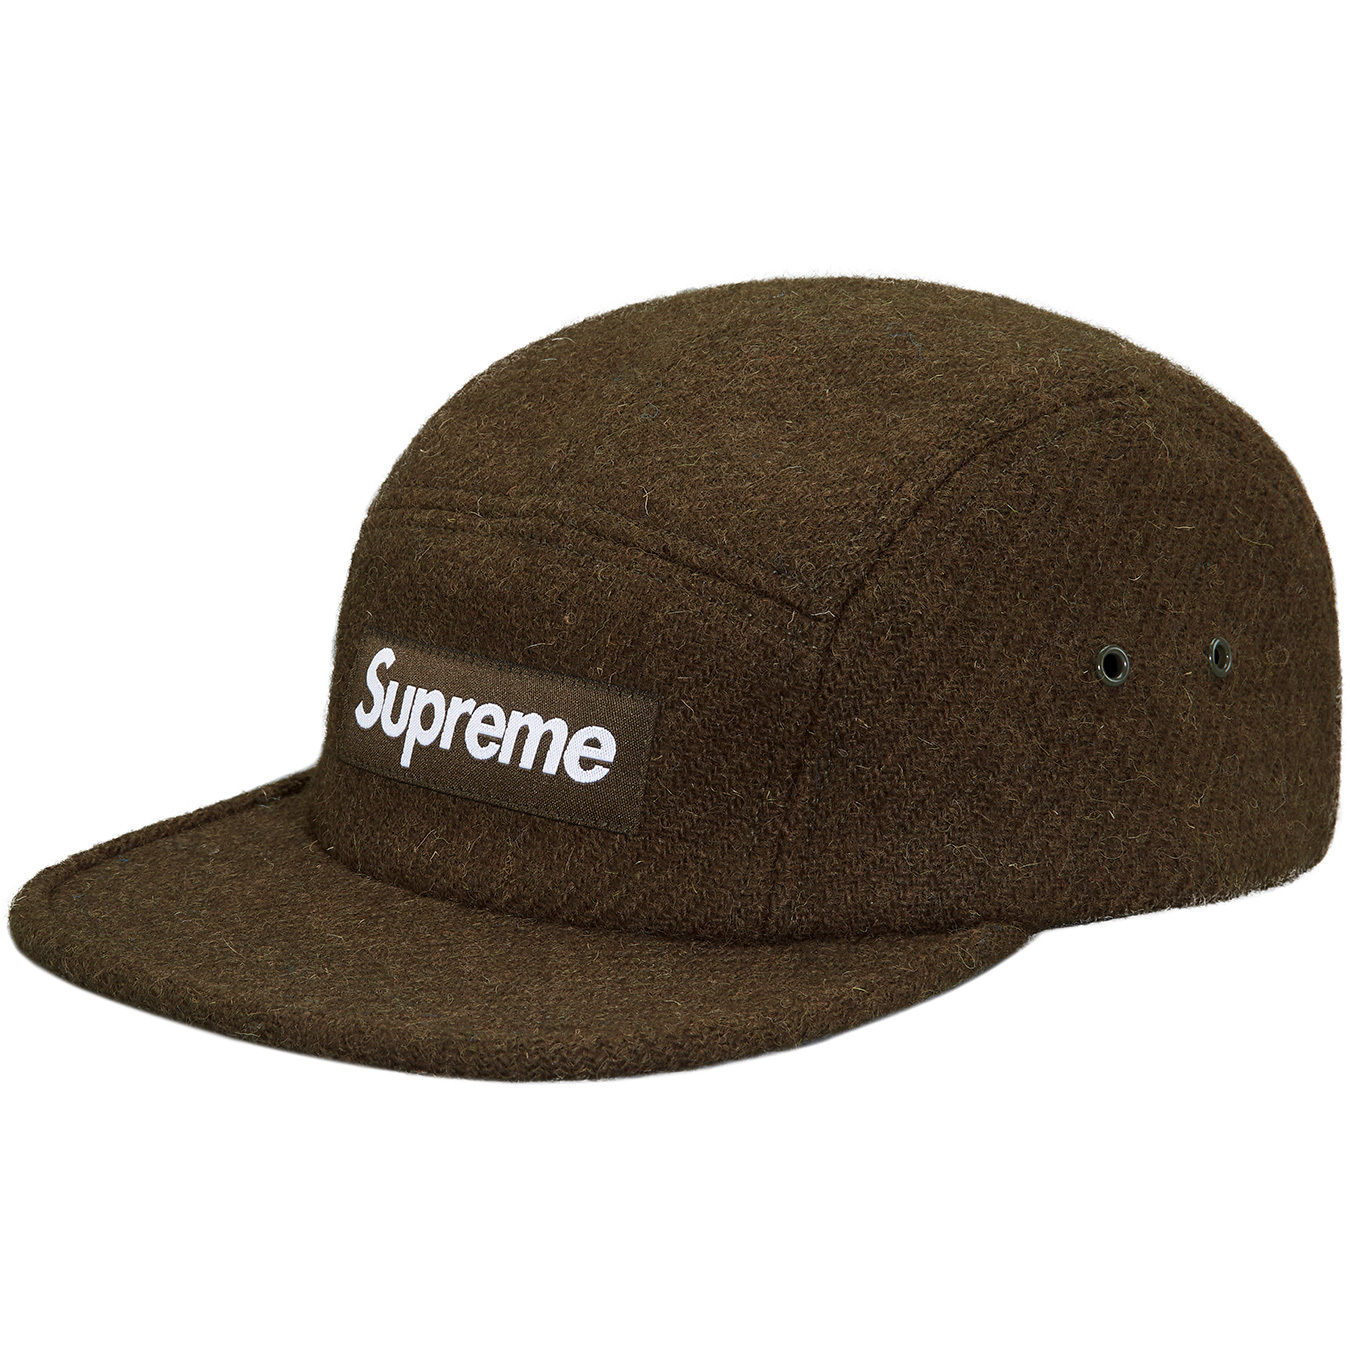 【純正半額】Supreme - Featherweight Wool Camp Cap 帽子